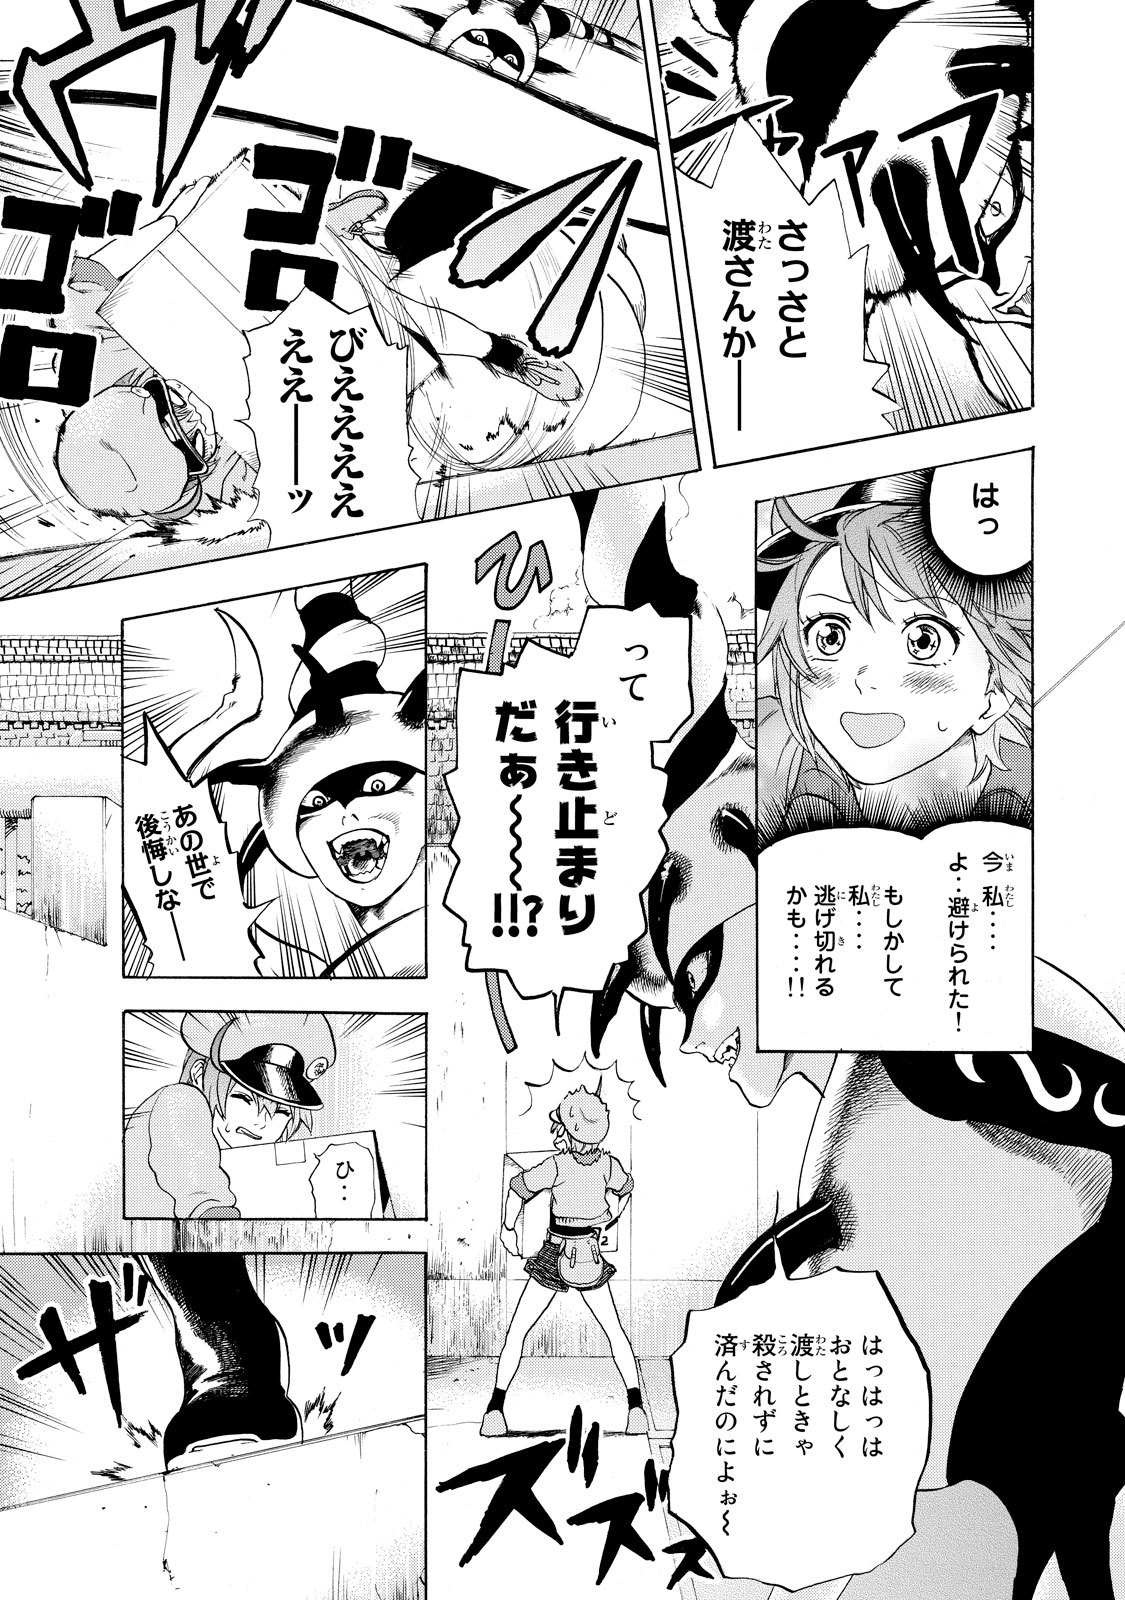 Hataraku Saibou - Chapter 15 - Page 5